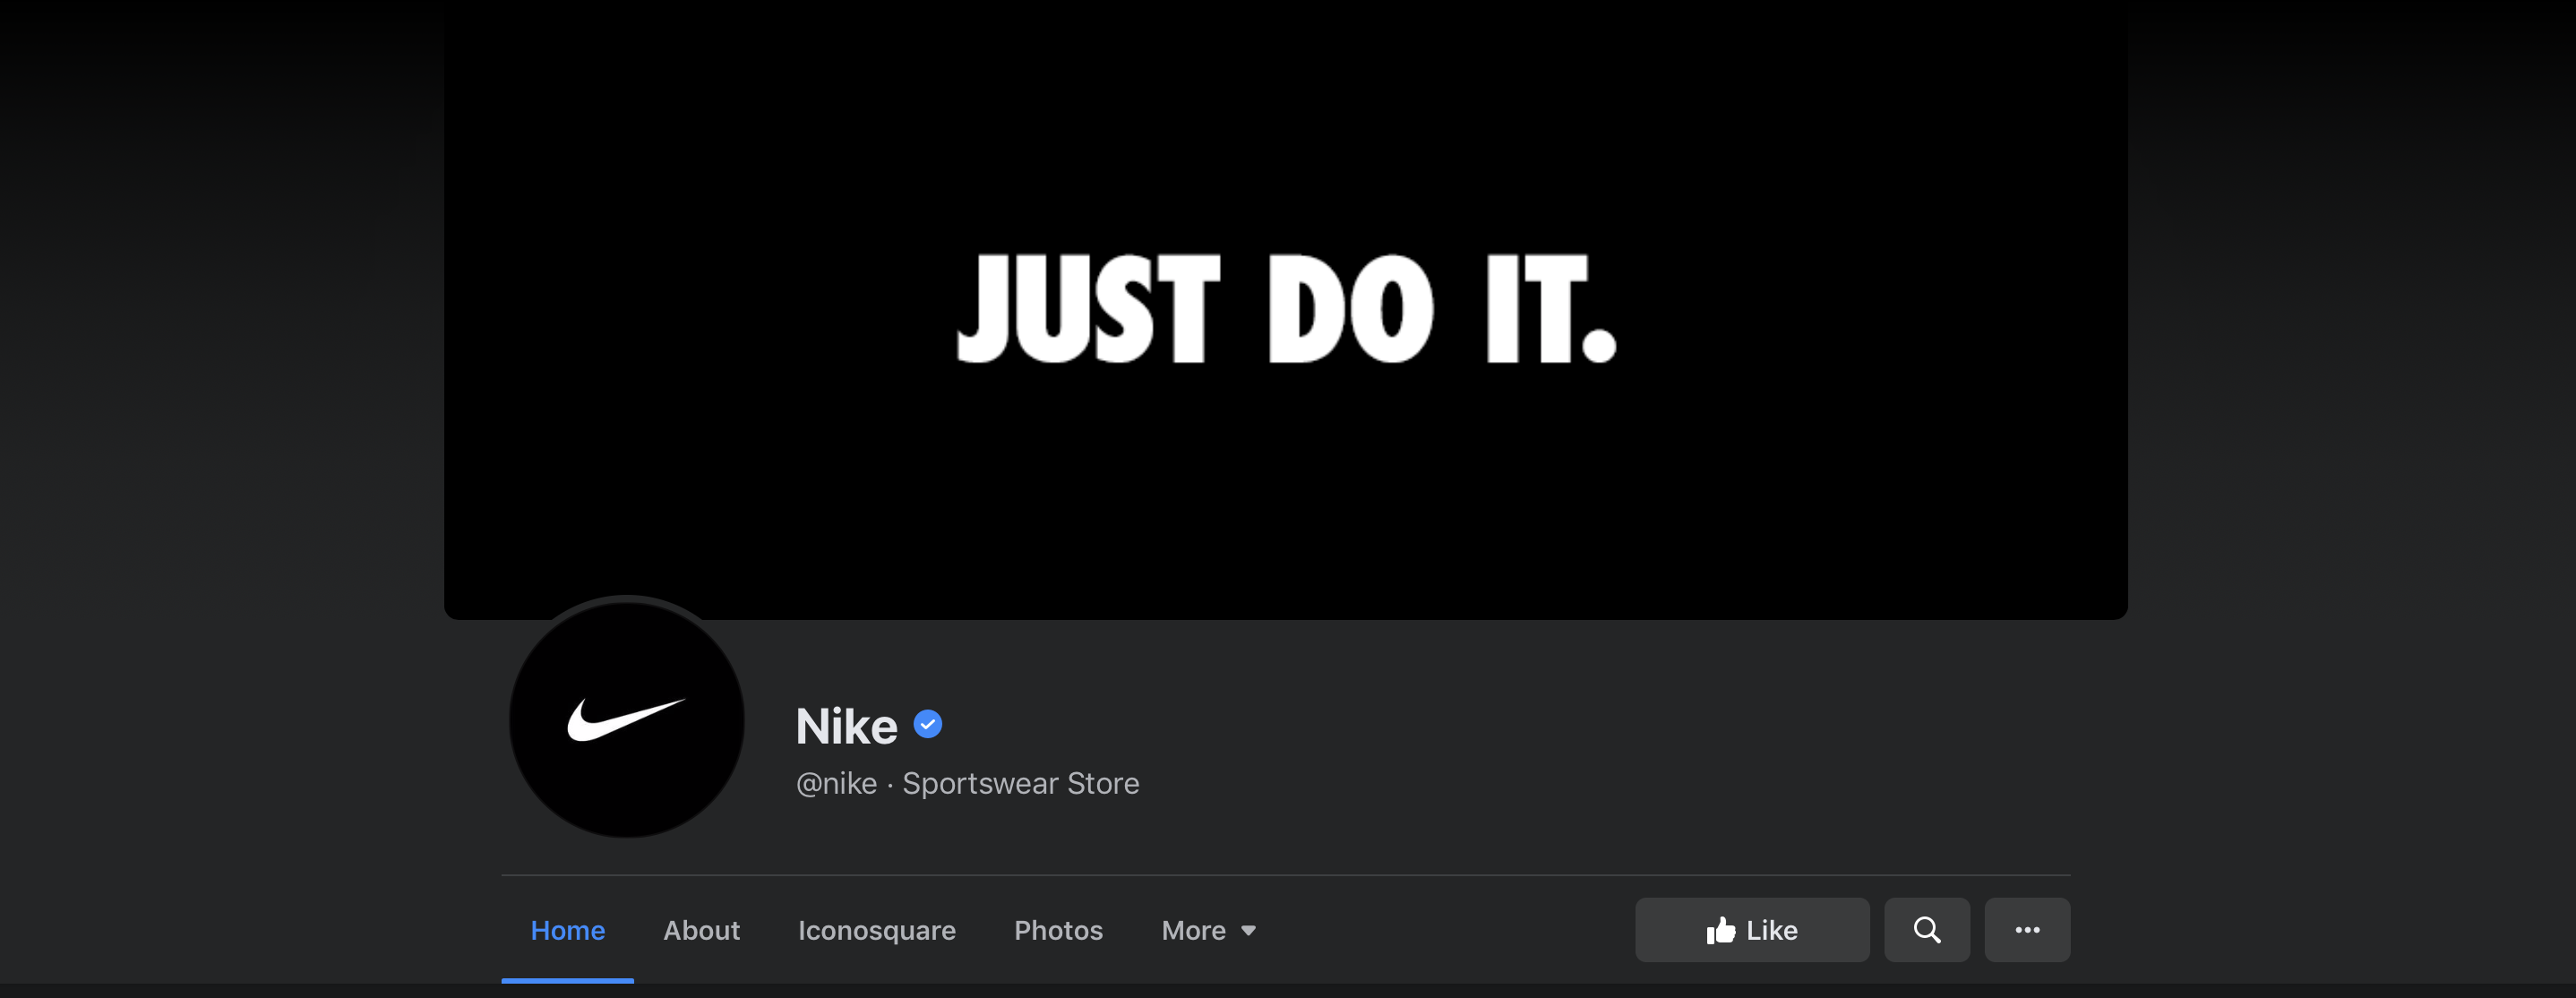 Nike Facebook Page